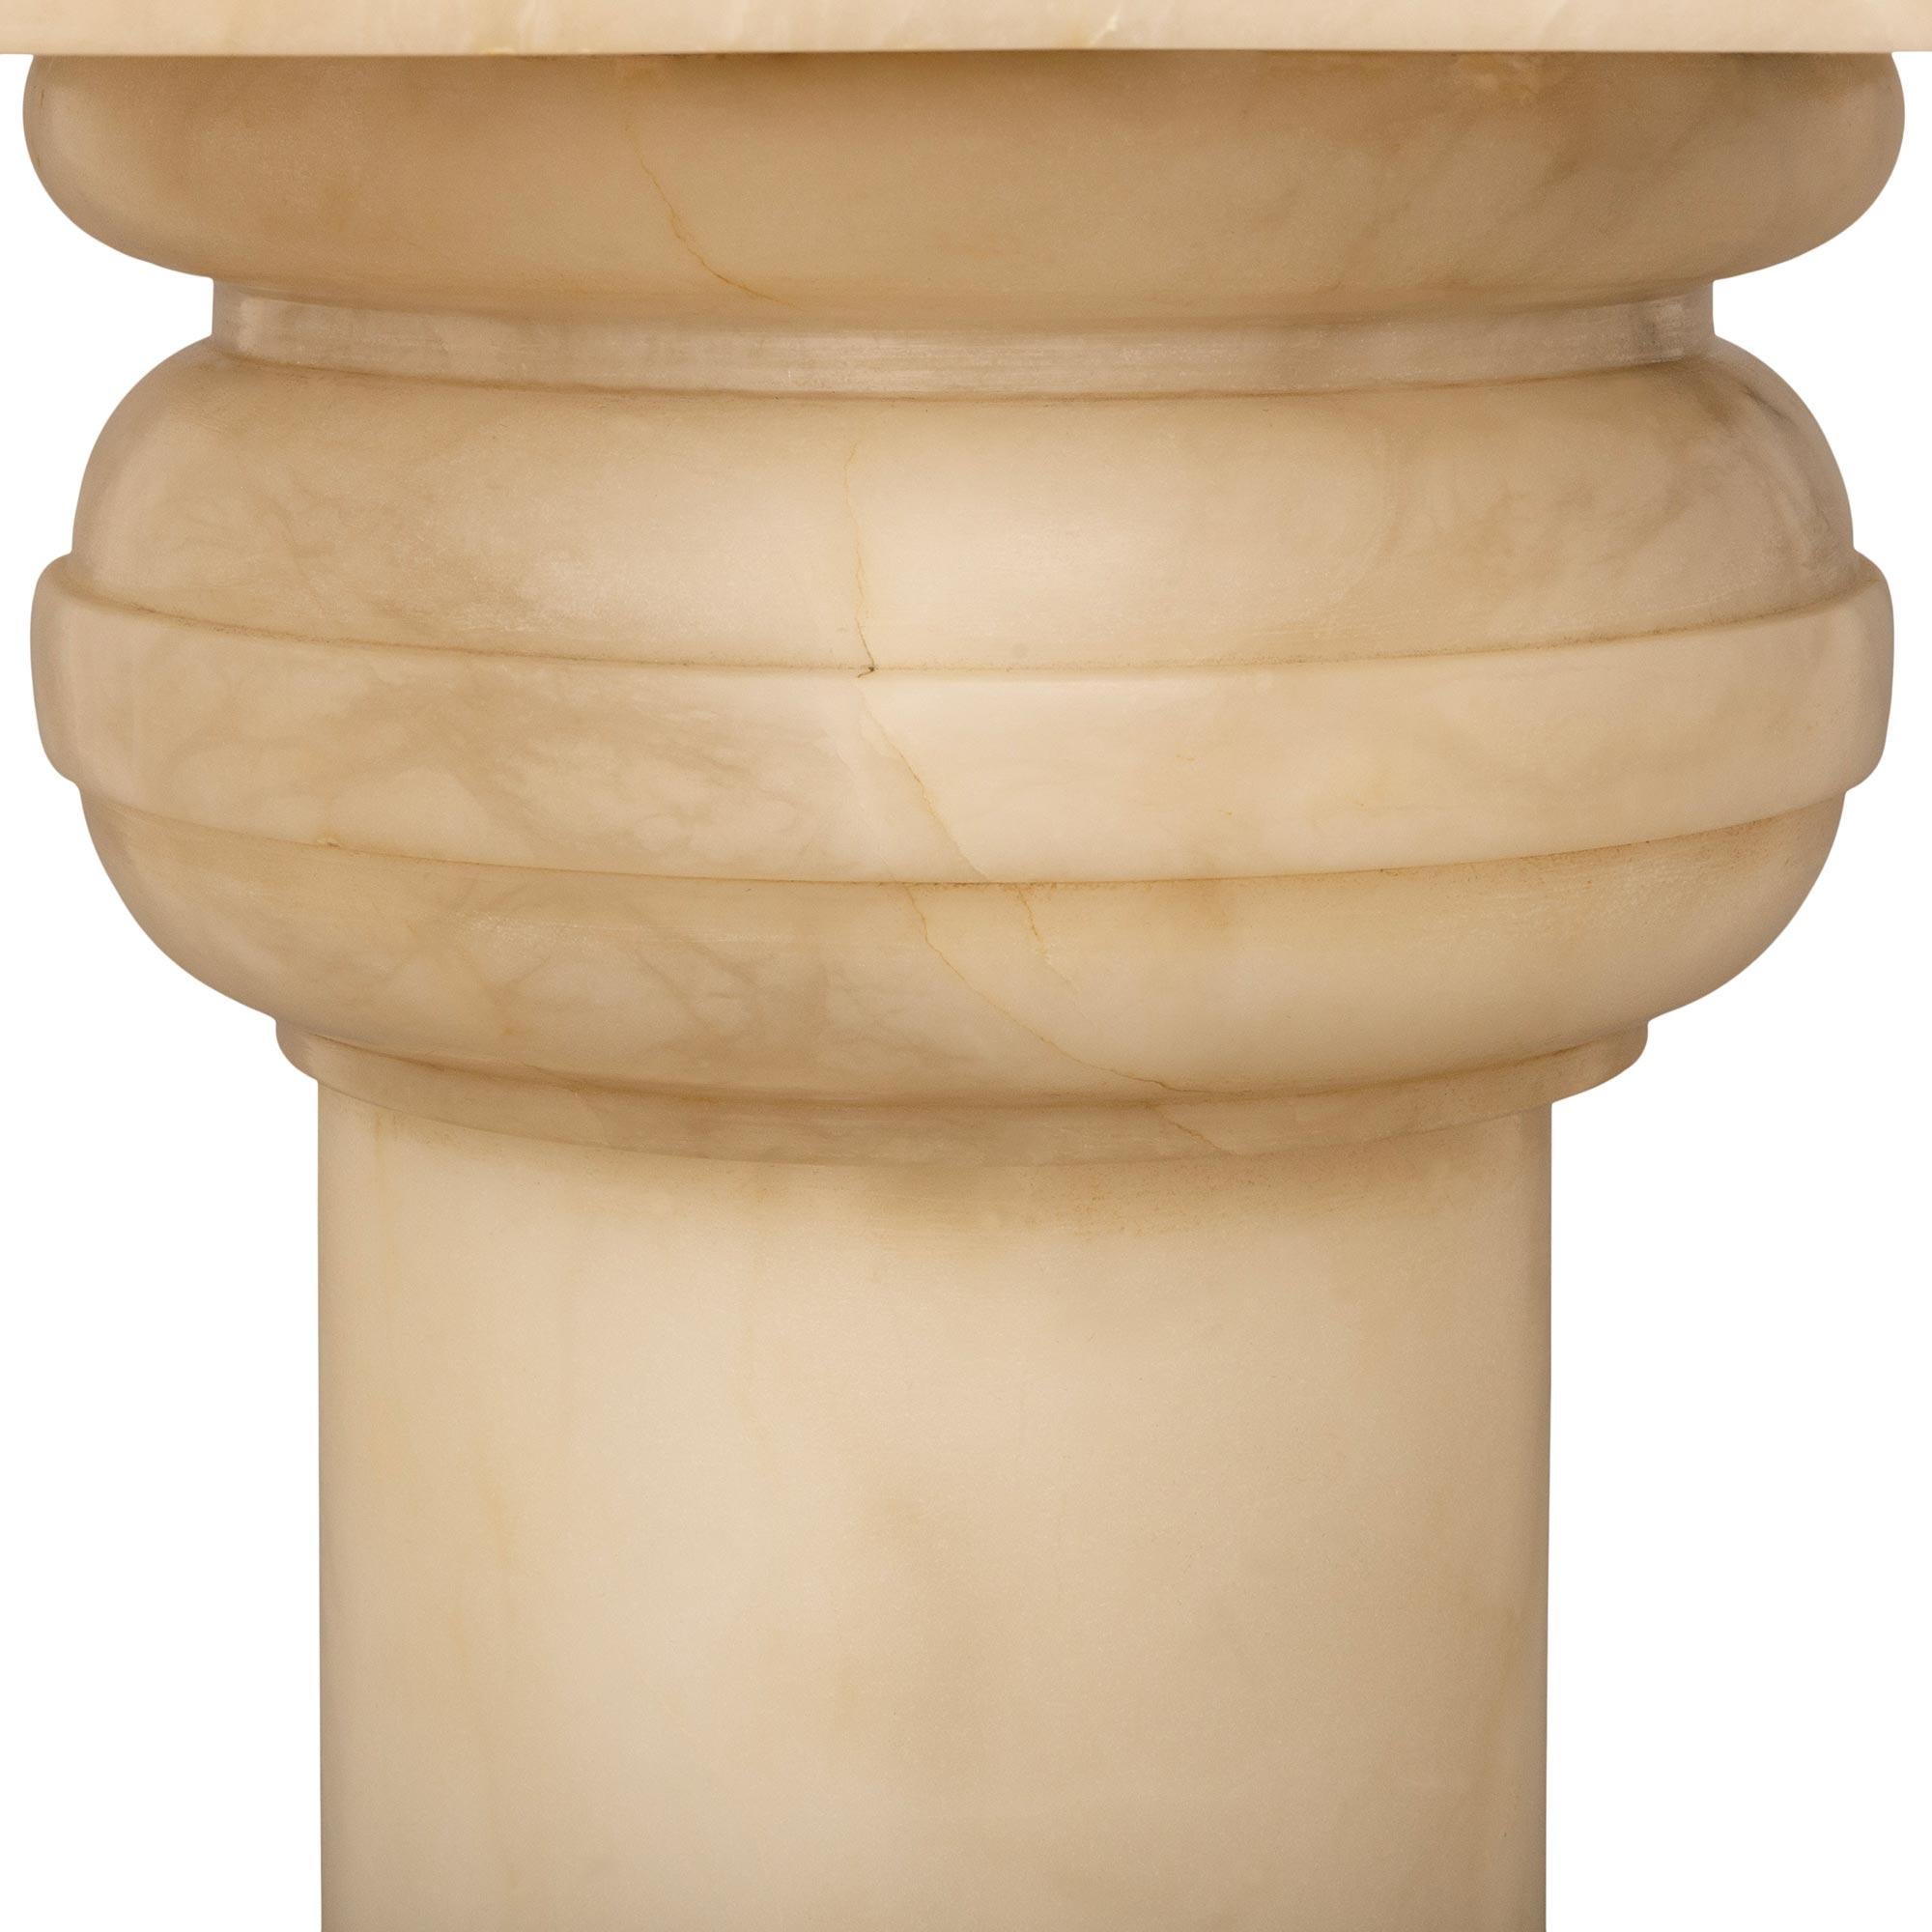 Italian 19th Century Cream Colored Alabaster Pedestal For Sale 1